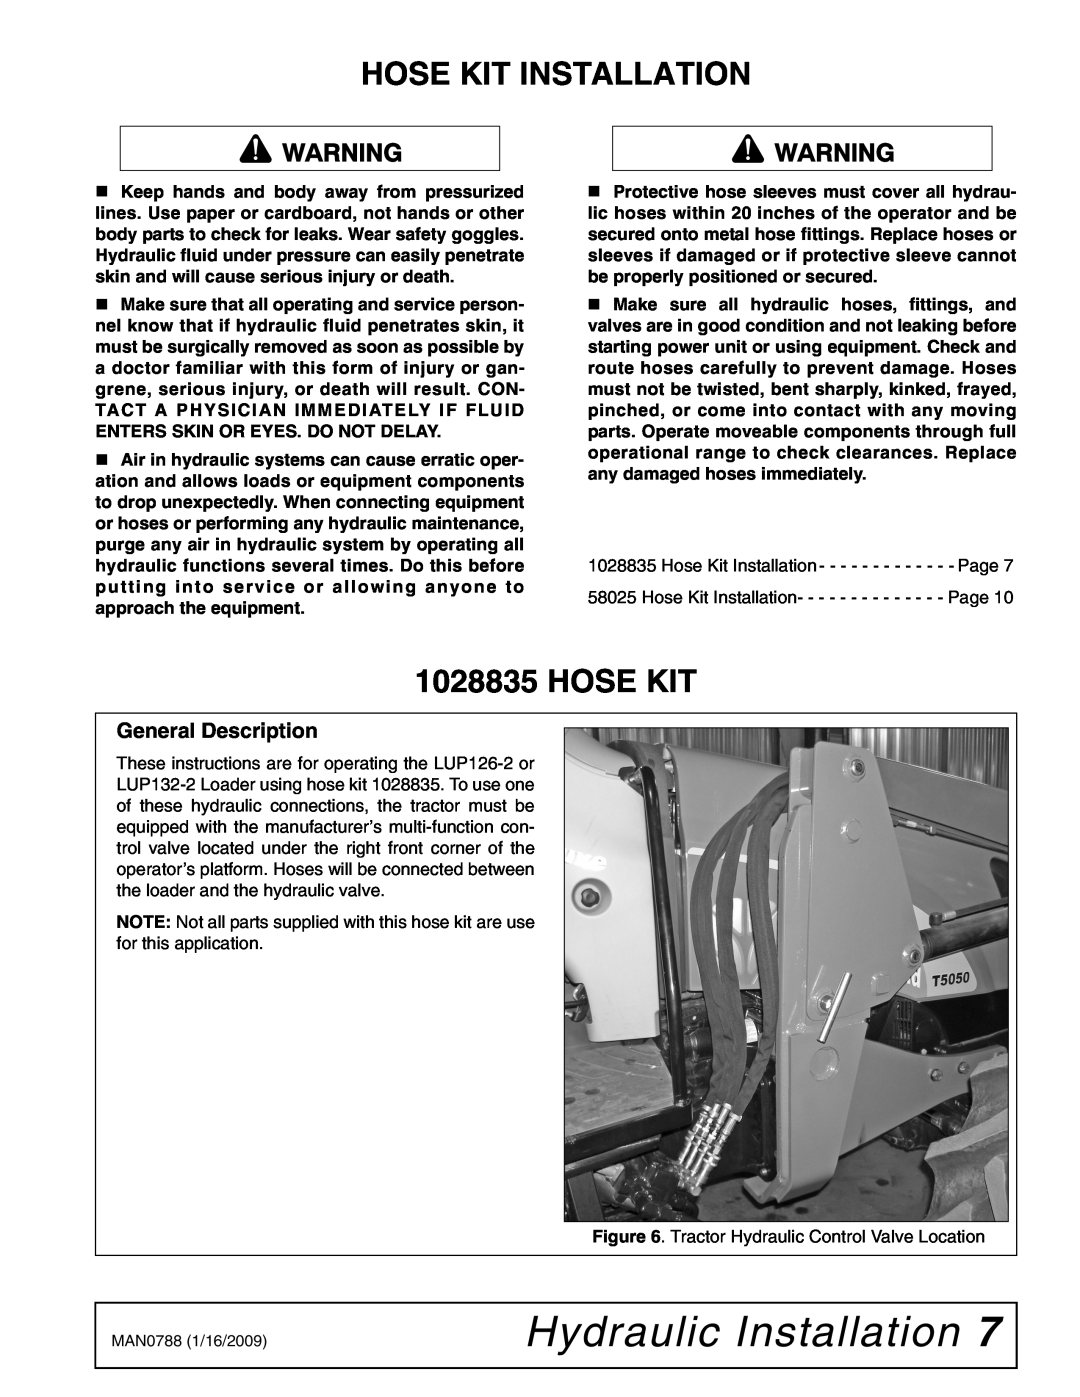 Woods Equipment T5050, T5070, T5060, T5040 Hydraulic Installation, Hose Kit Installation, General Description 